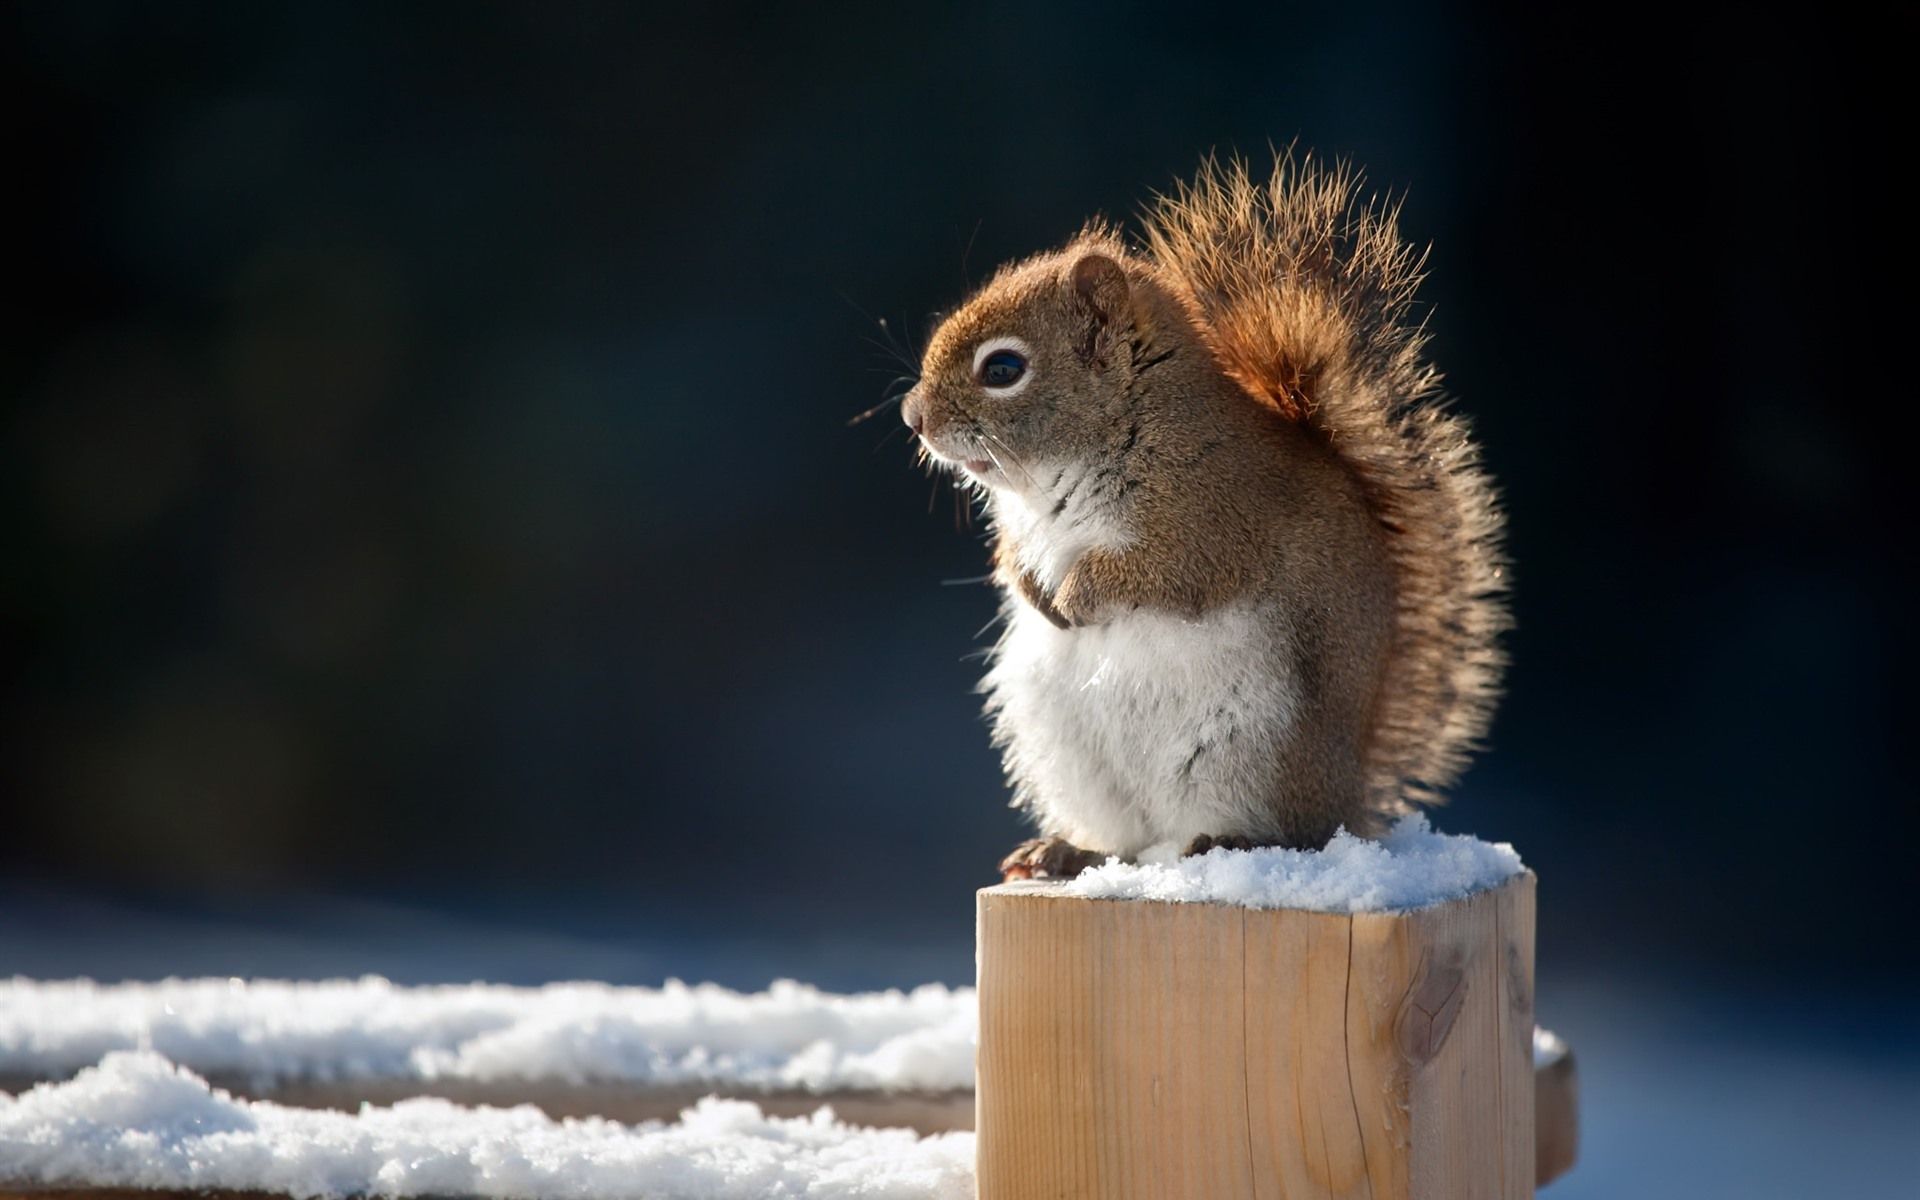 1920x1200 Wallpaper Cute Squirrel Snow Winter Stump 1920x1200 Hd Picture Image